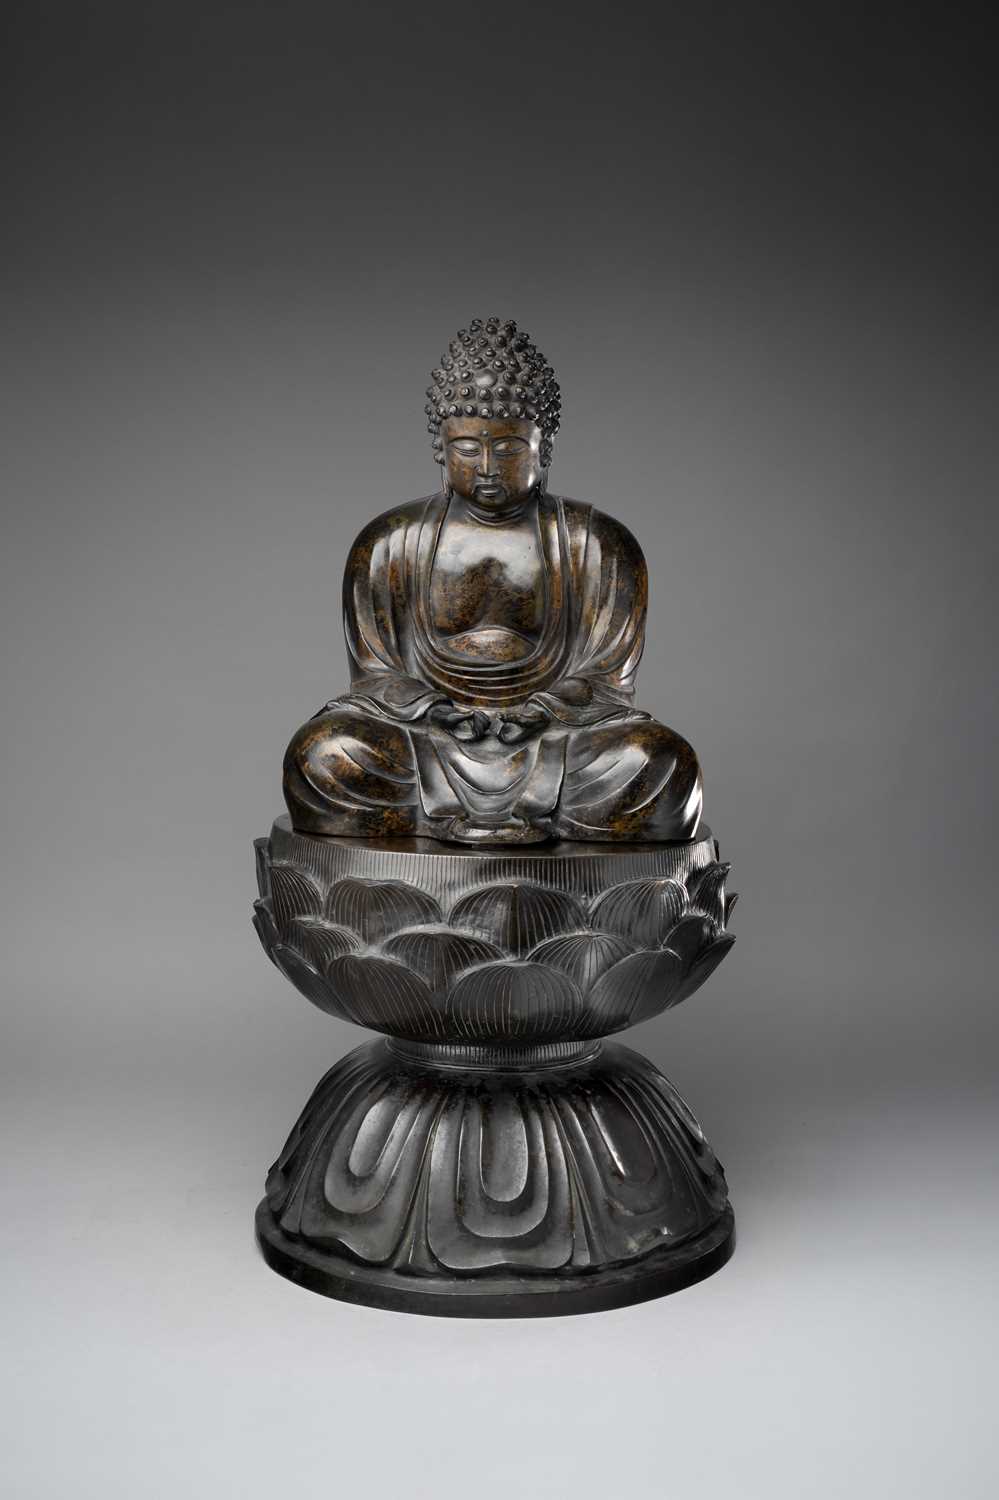 A LARGE BRONZE FIGURE OF BUDDHA SHAKYAMUNI 19TH CENTURY Japanese or Korean, seated in dhyanasana